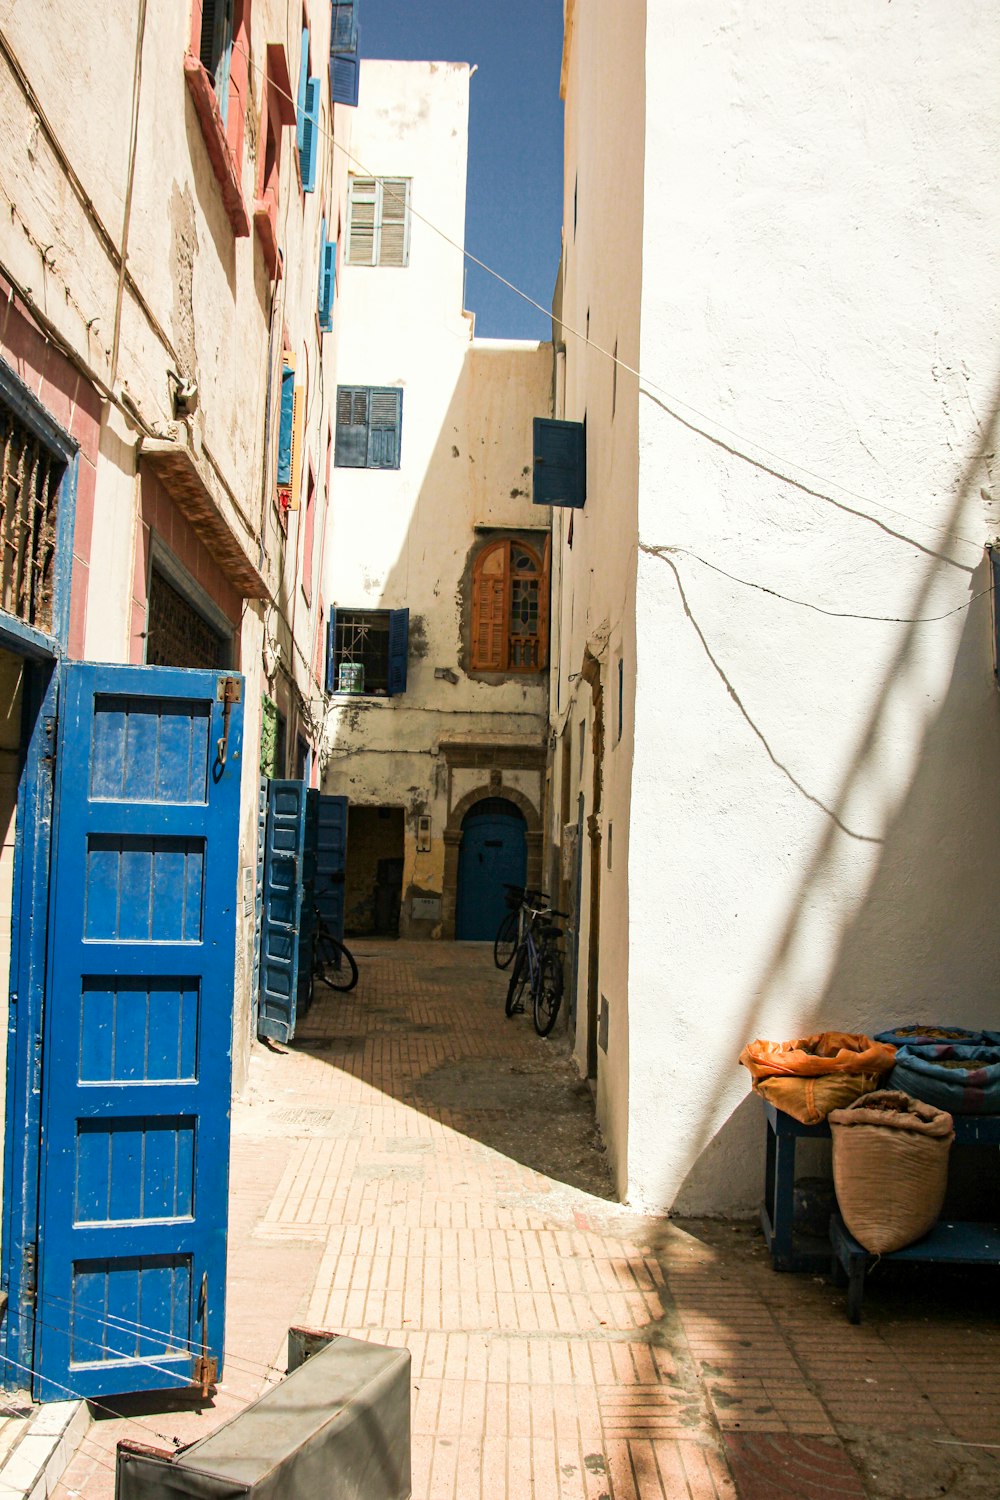 a narrow alley way with a blue door